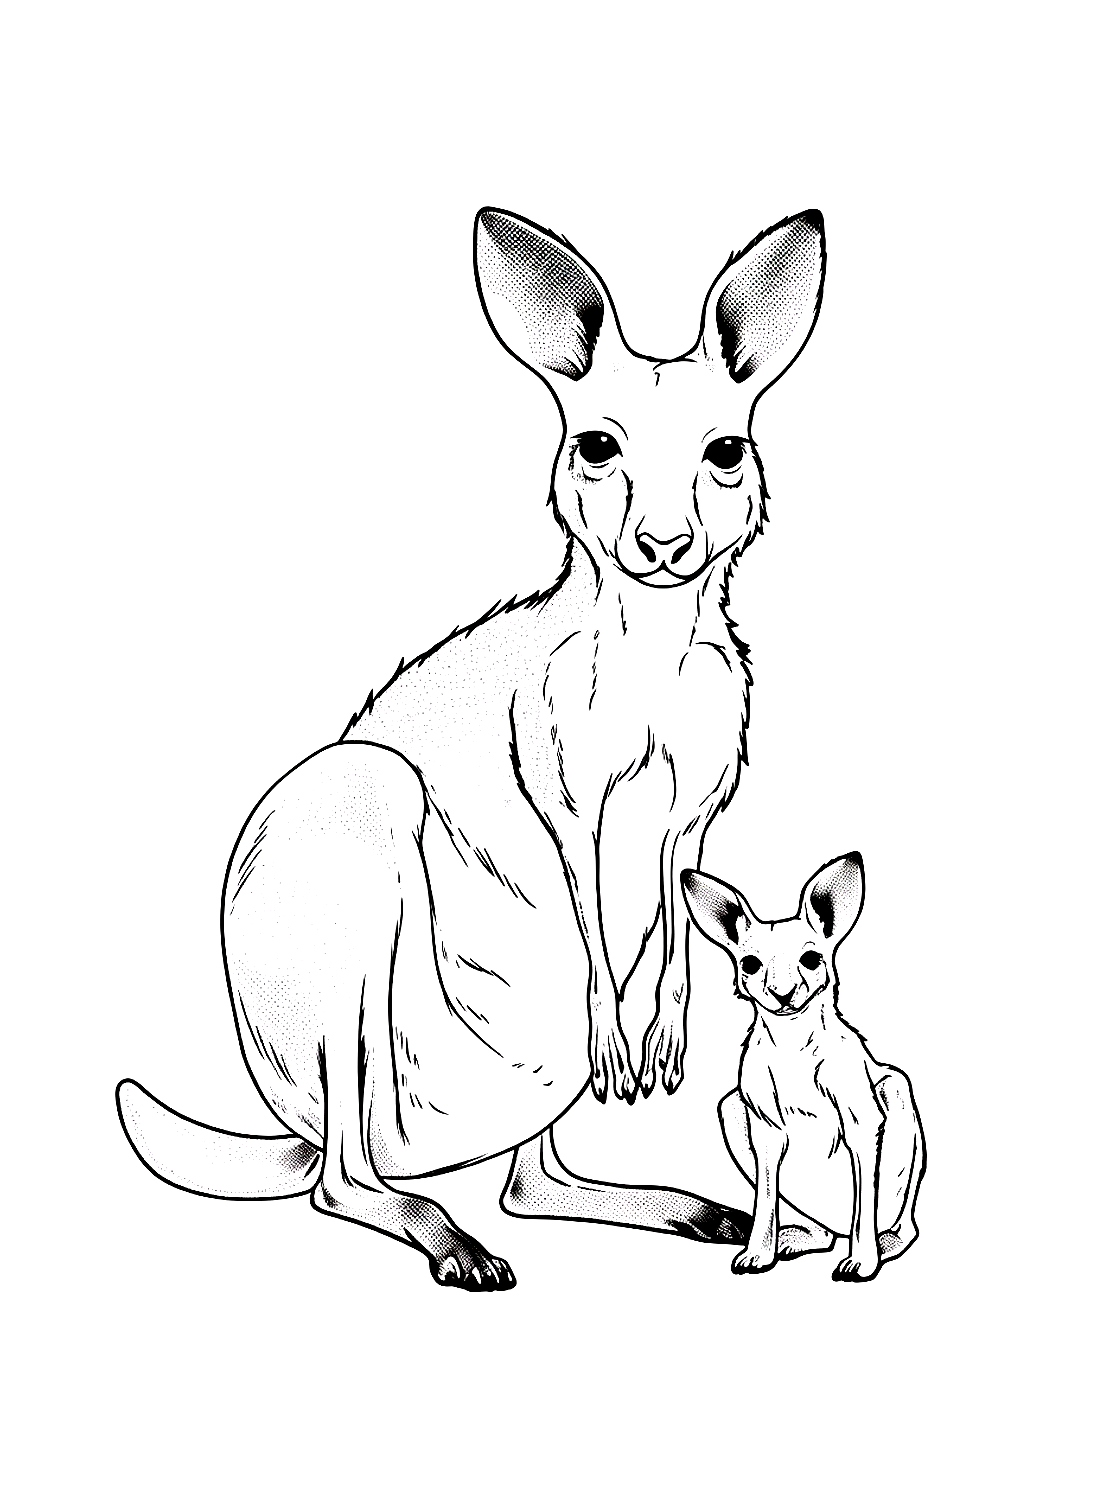 Cute Kangaroo and Baby Kangaroo from Kangaroo